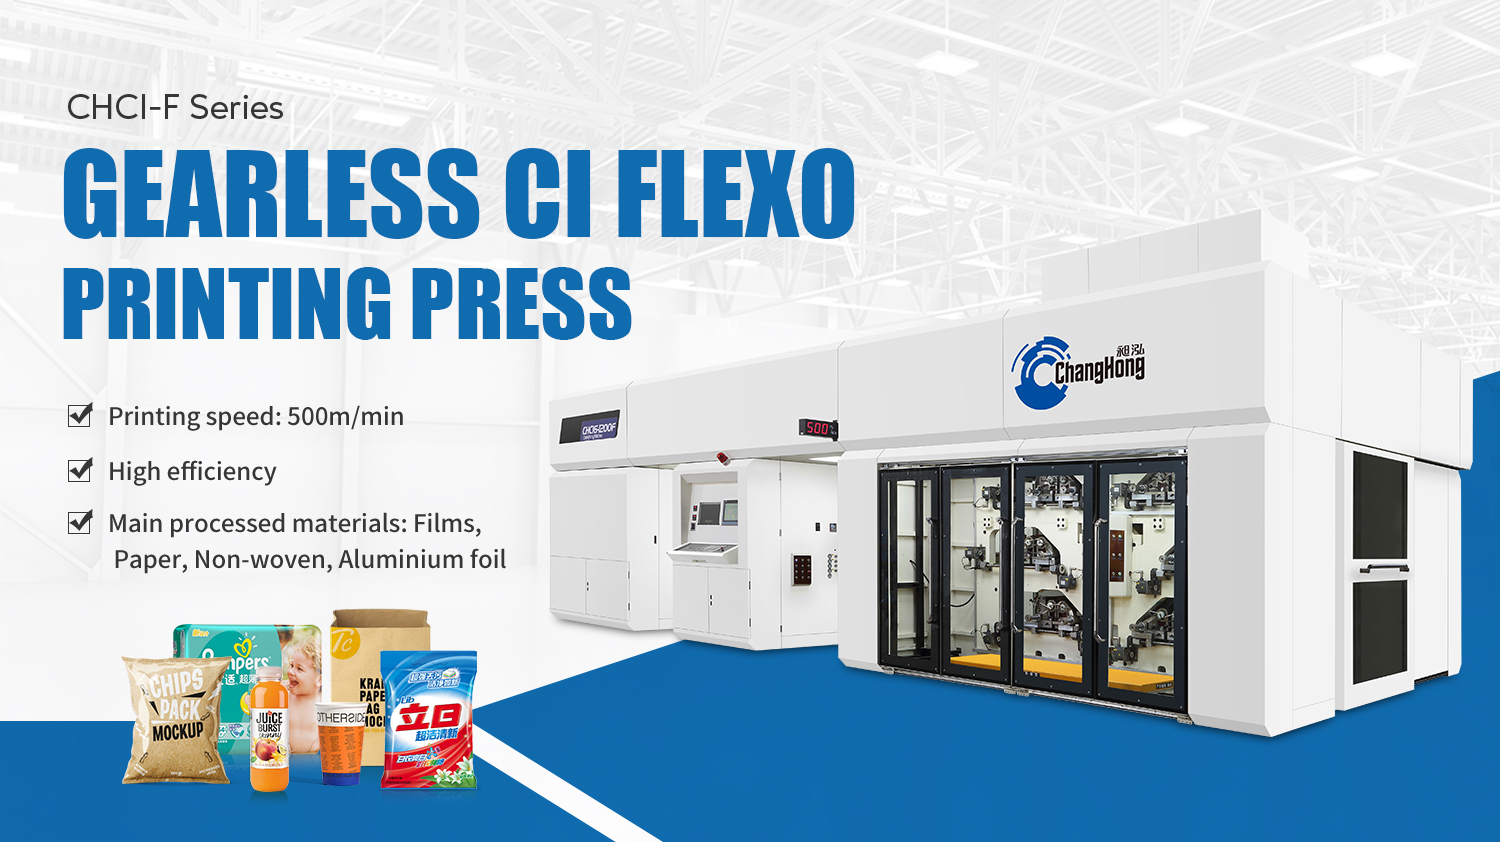 Flexo printing presses: the future of printing technology